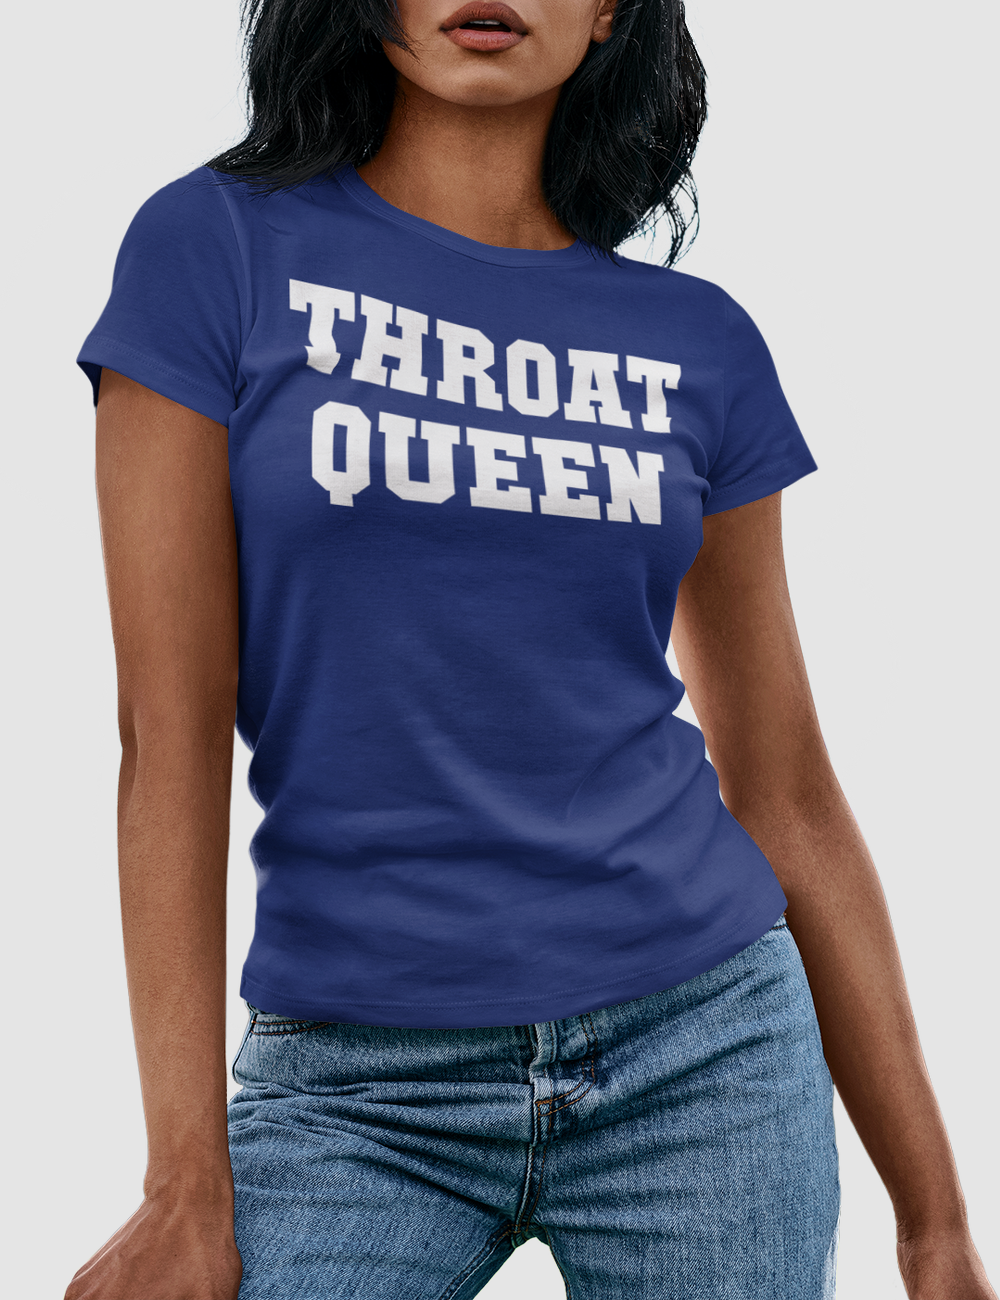 Throat Queen | Women's Fitted T-Shirt OniTakai